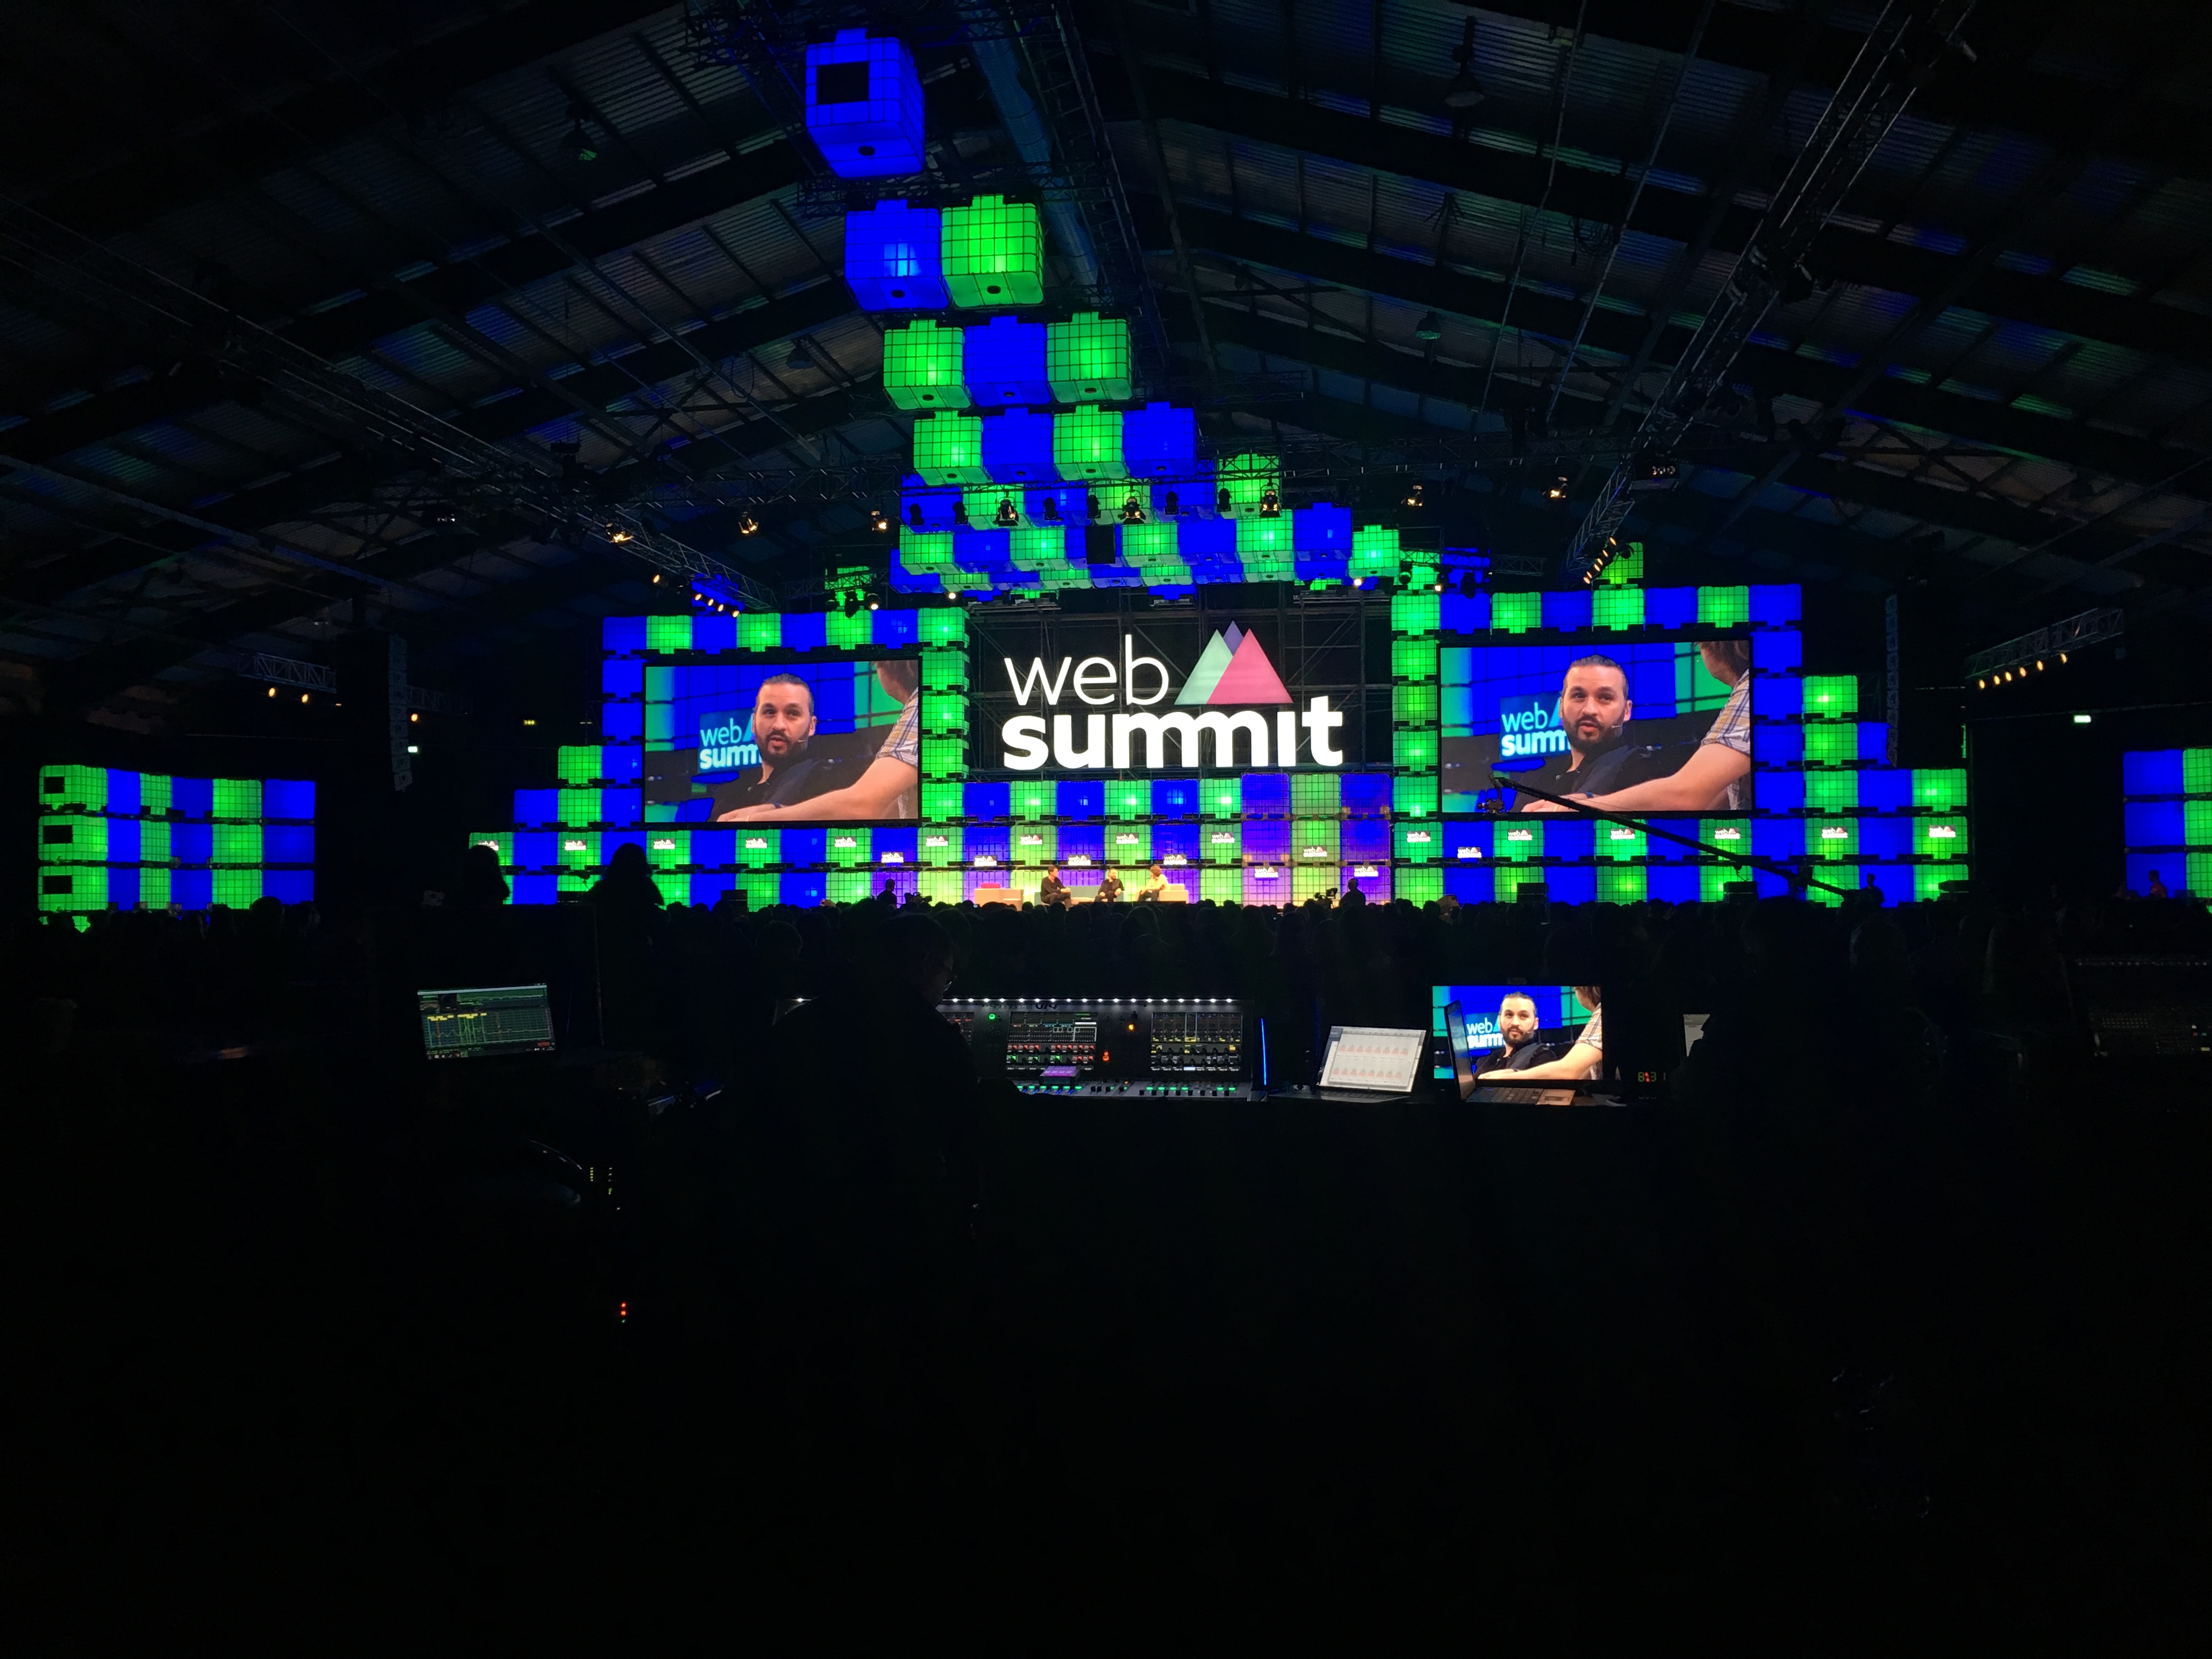 Web summit 